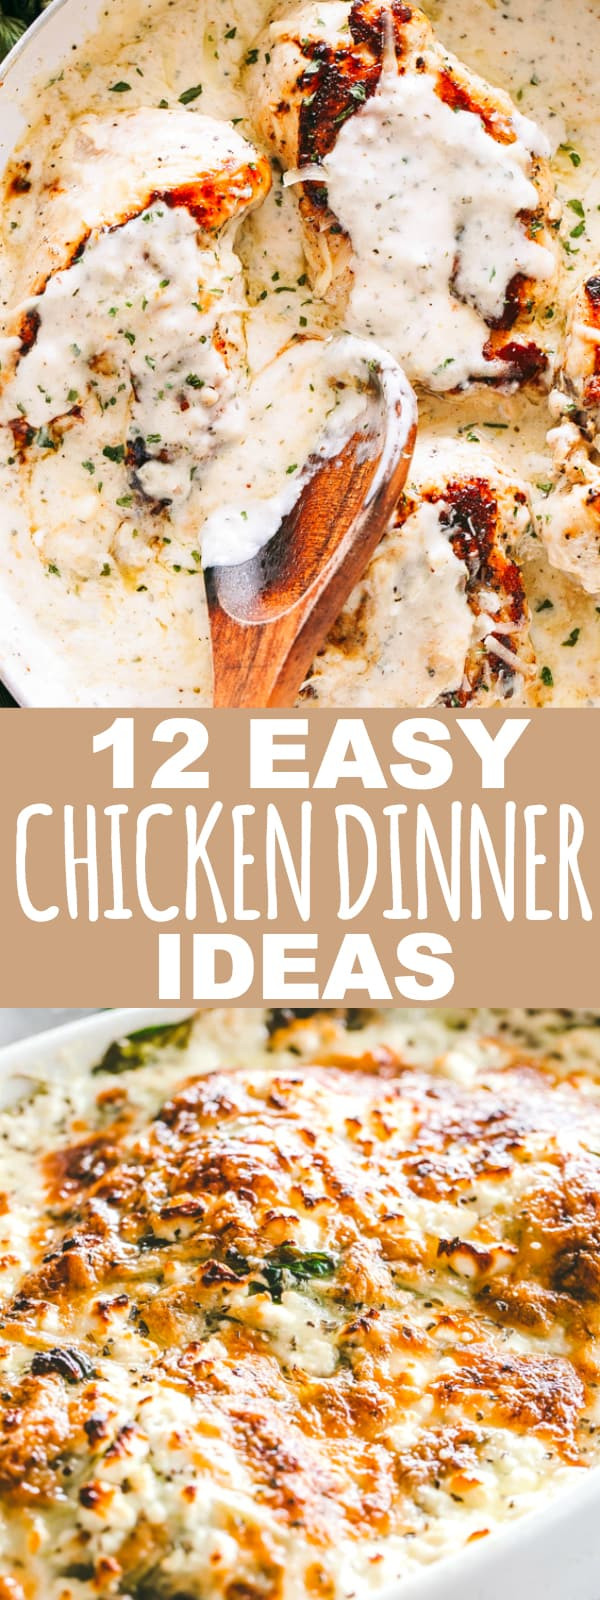 Quick Chicken Dinner Ideas
 12 Easy Chicken Dinner Ideas Your Family Will Love